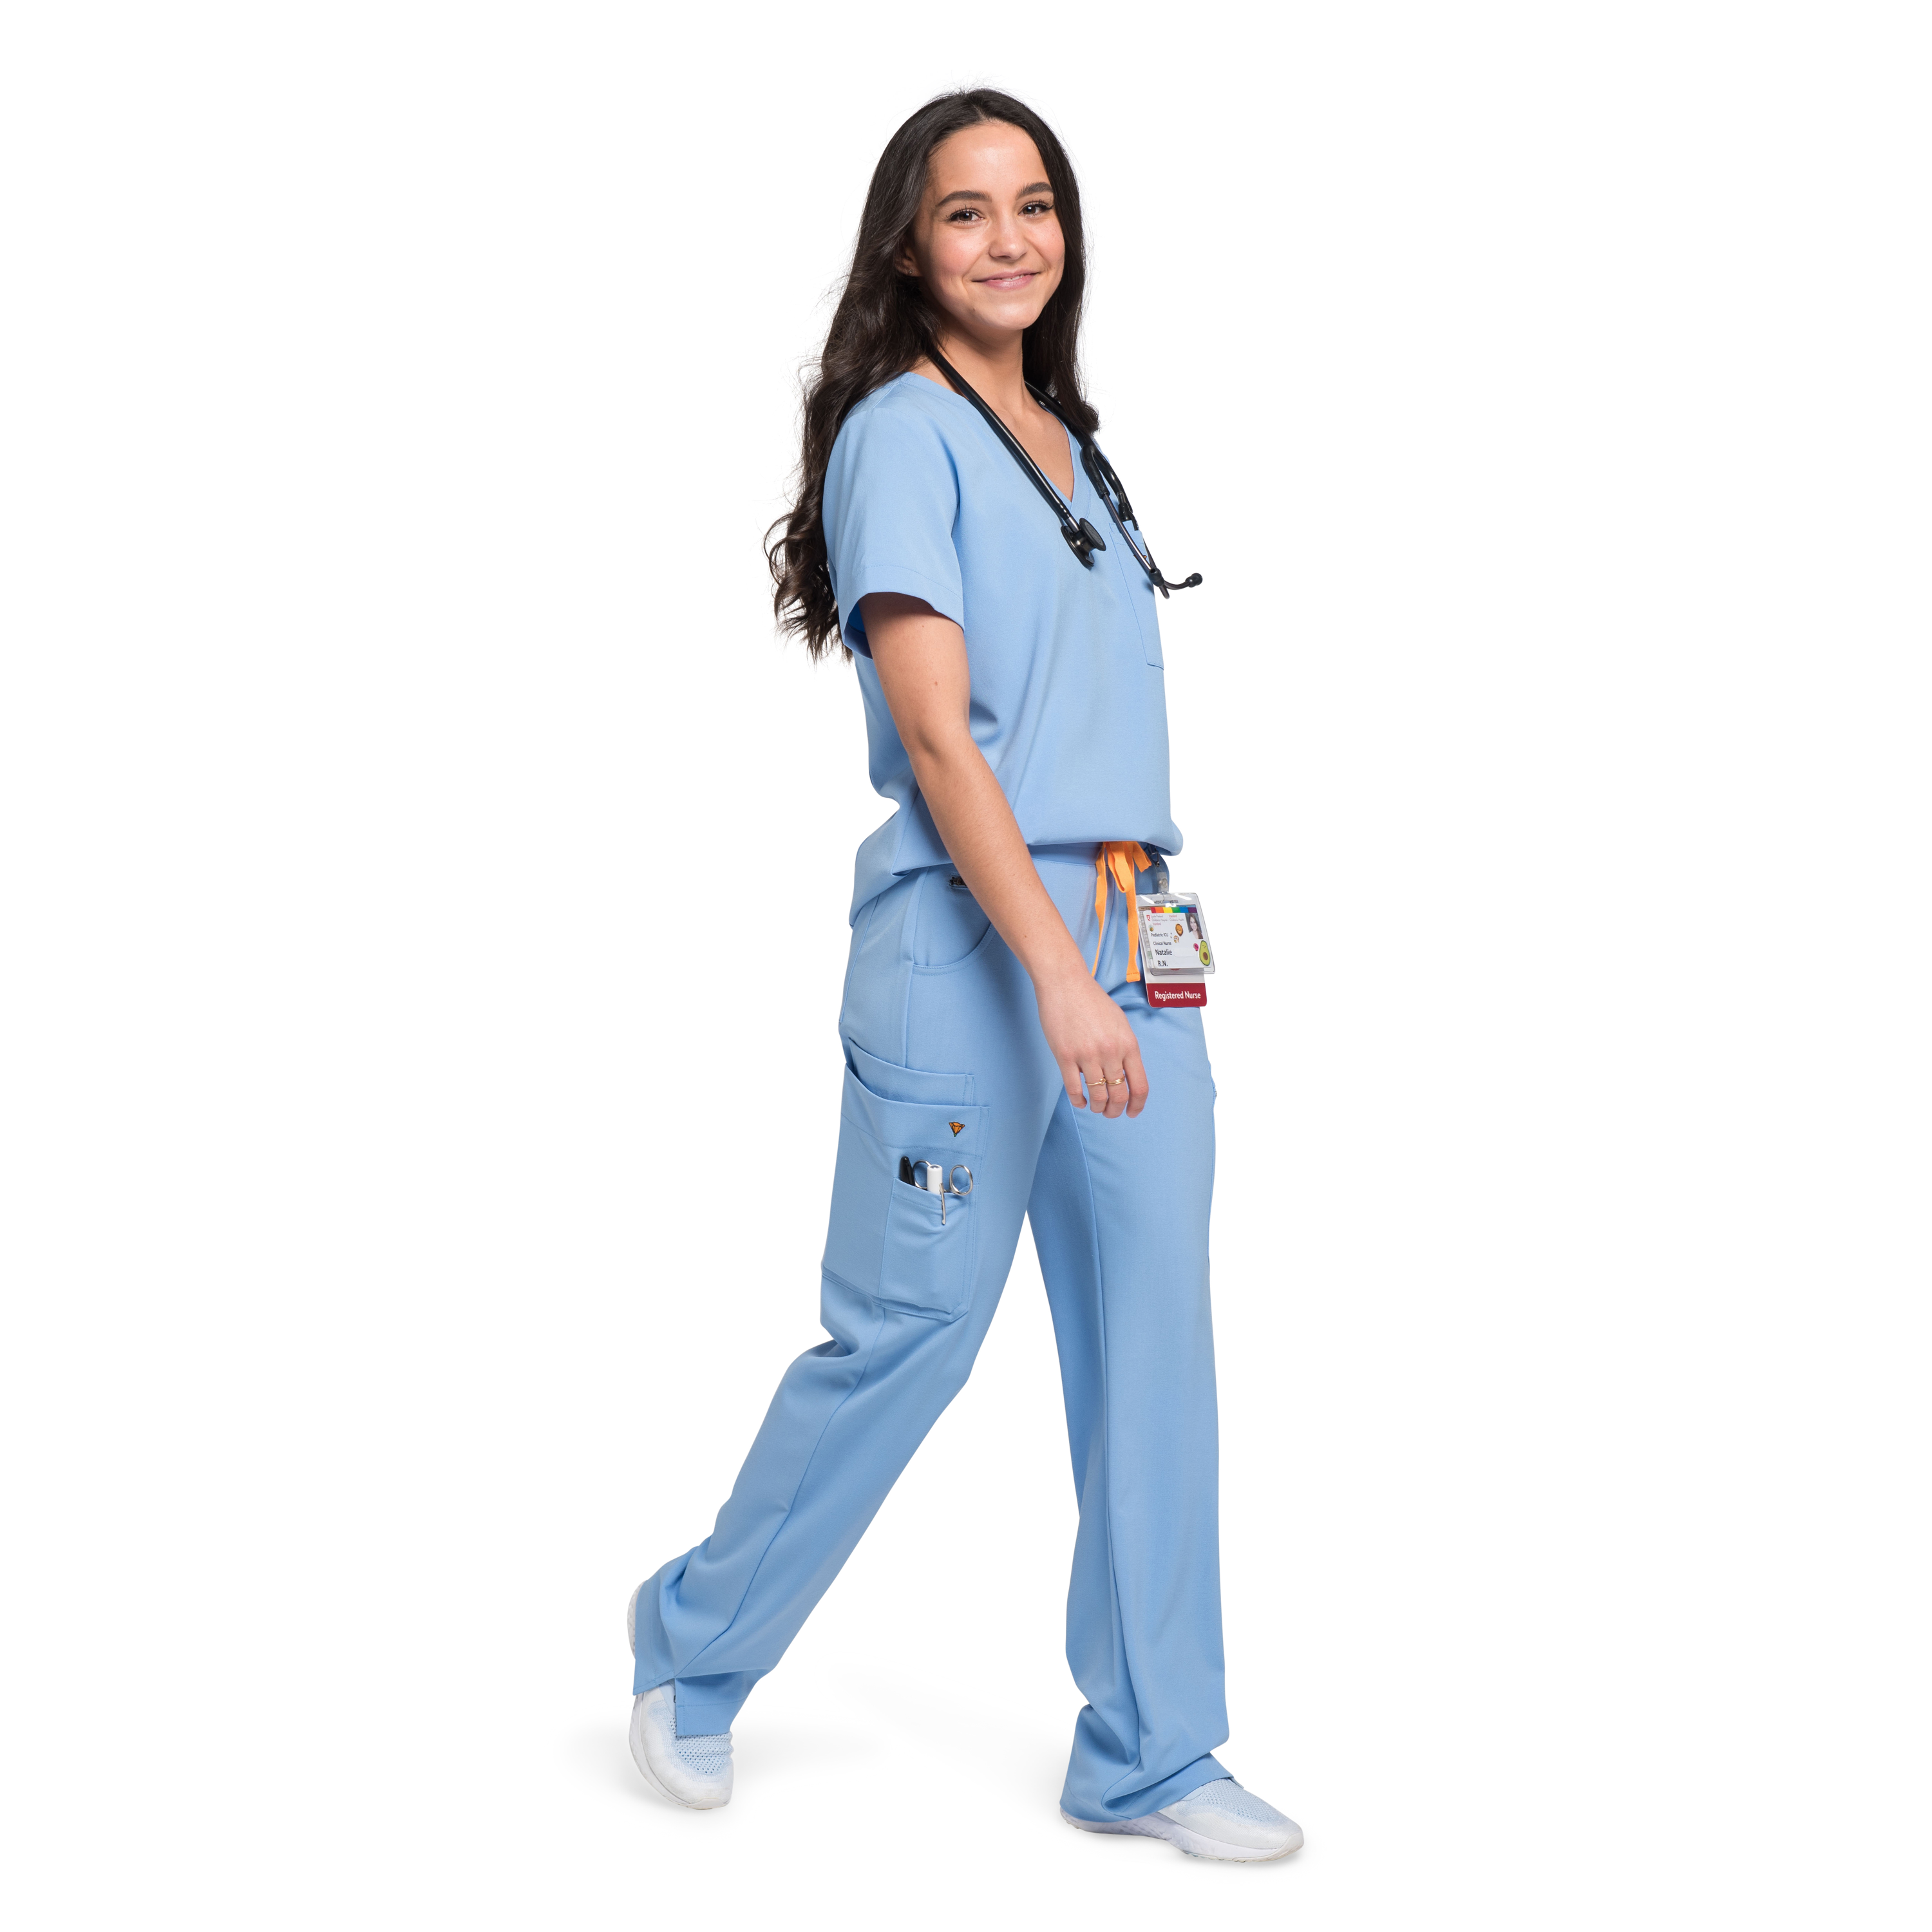 Bodie regular fit scrubs for women in ceil blue